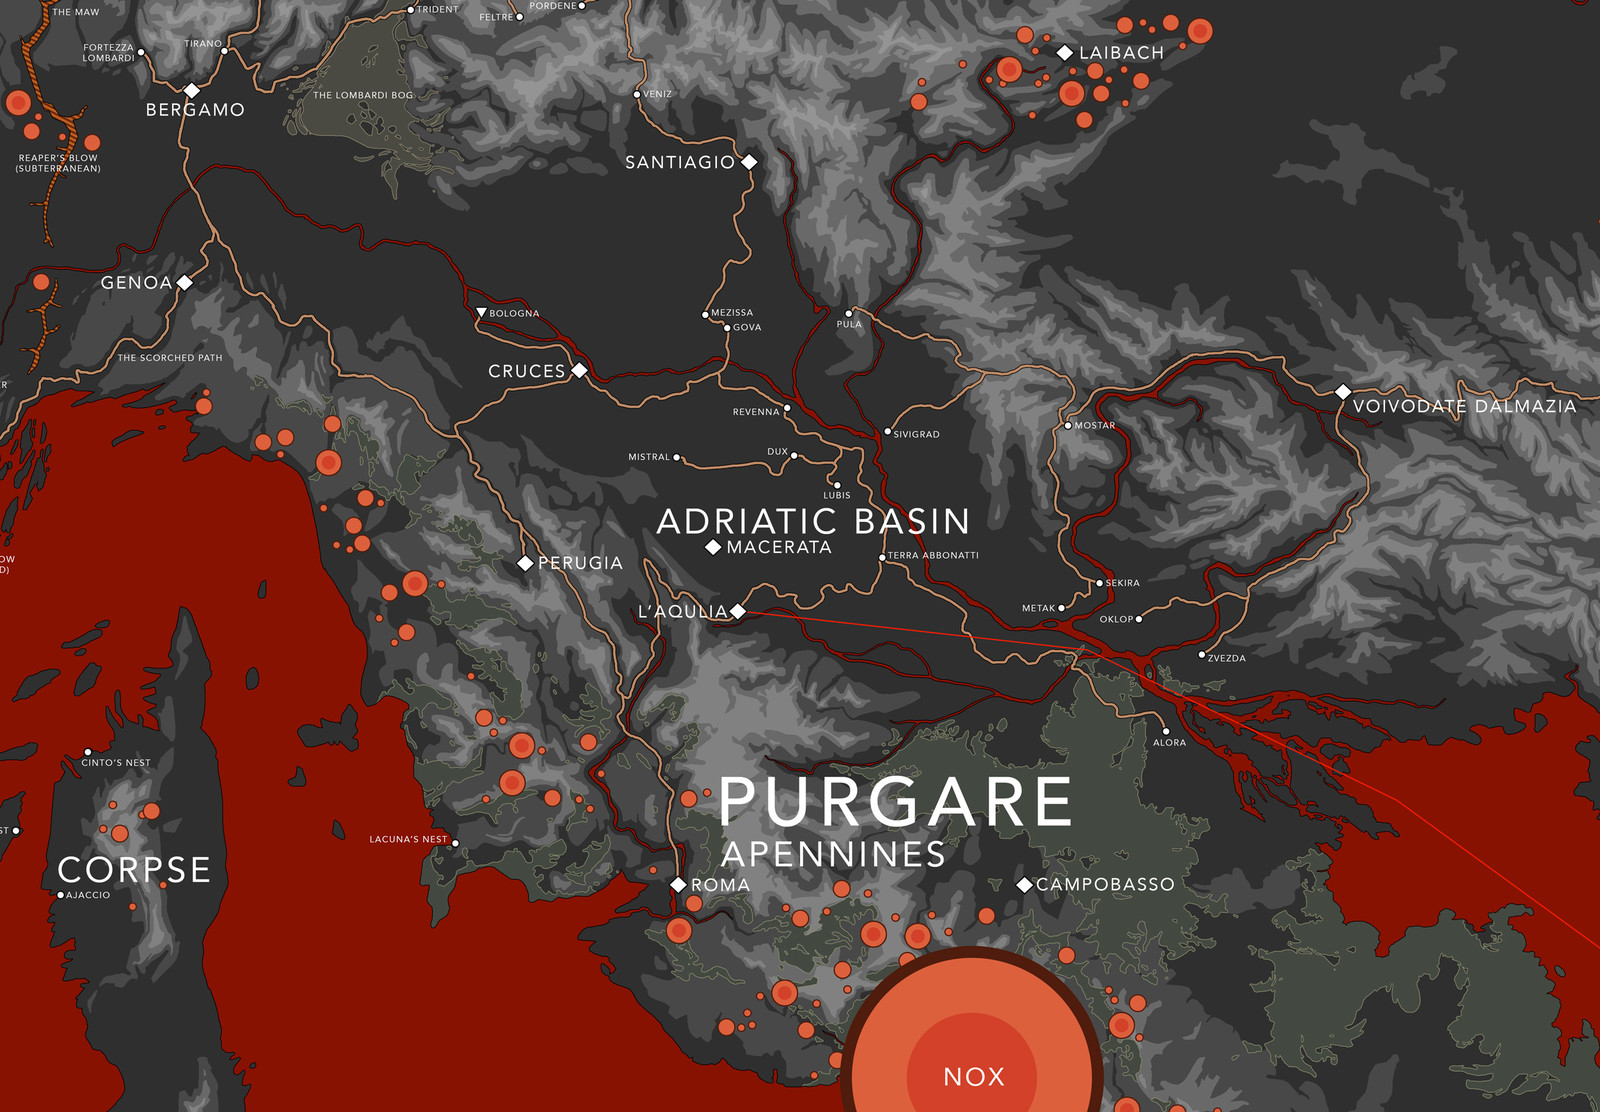 Purgare and the Adriatic Basin